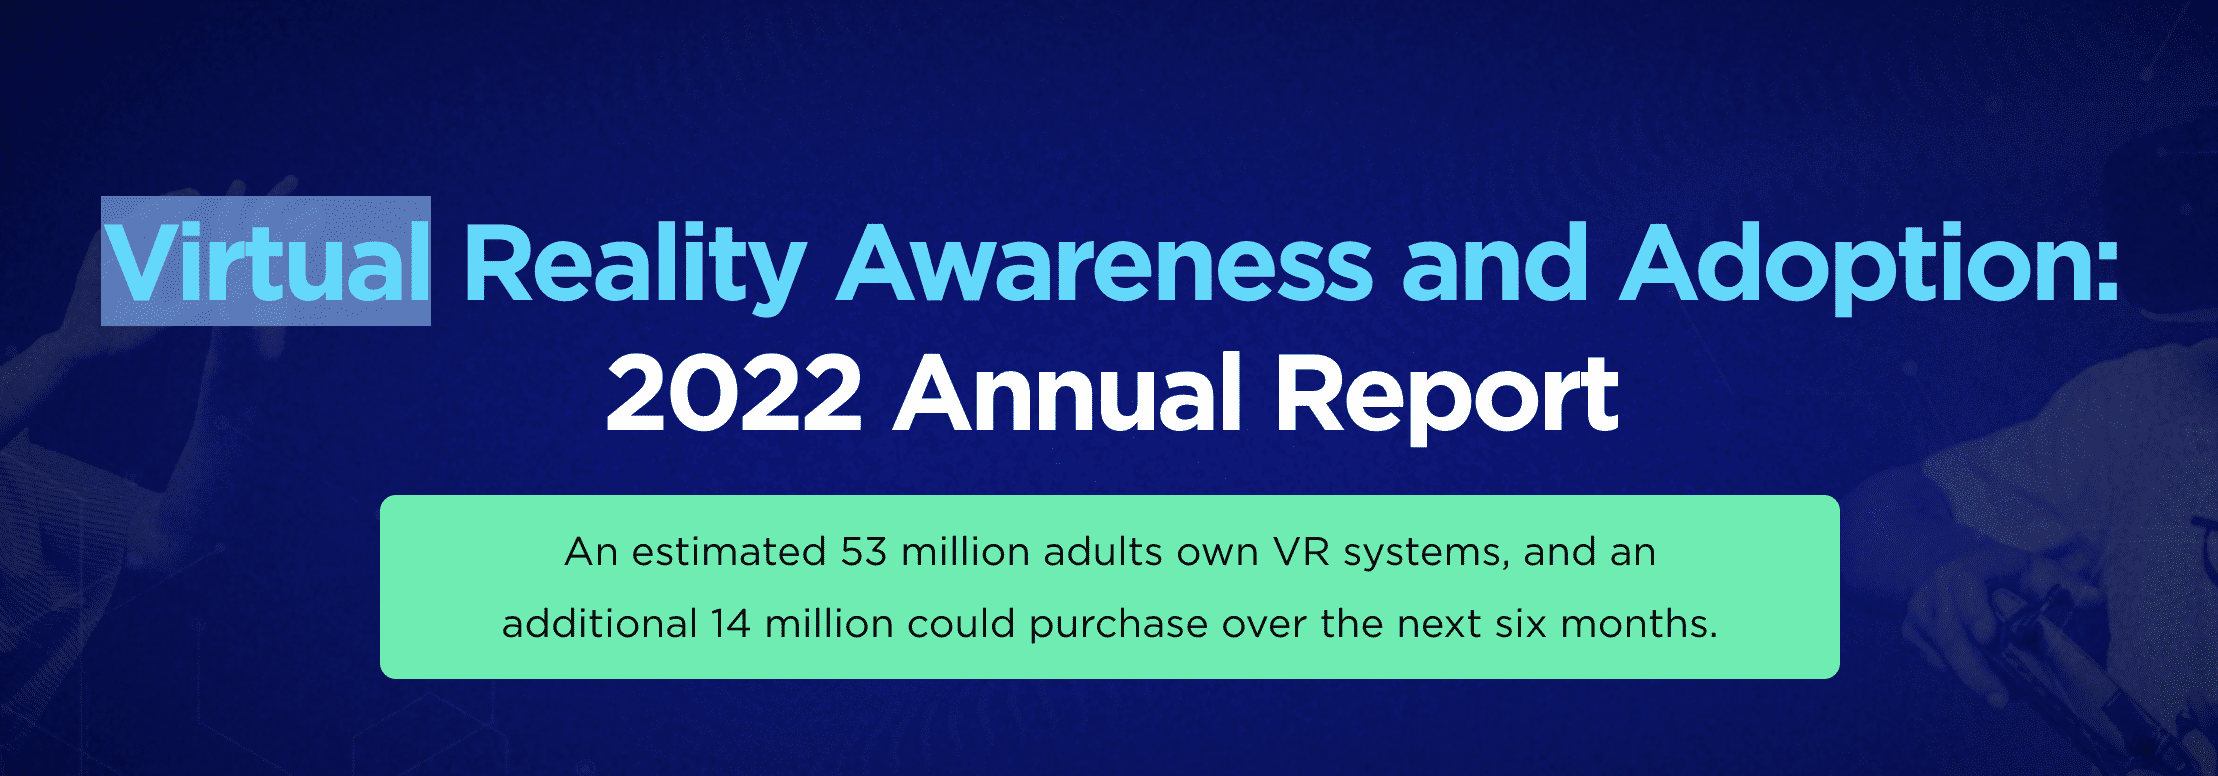 Virtual Reality Awareness and Adoption: 2022 Annual Report